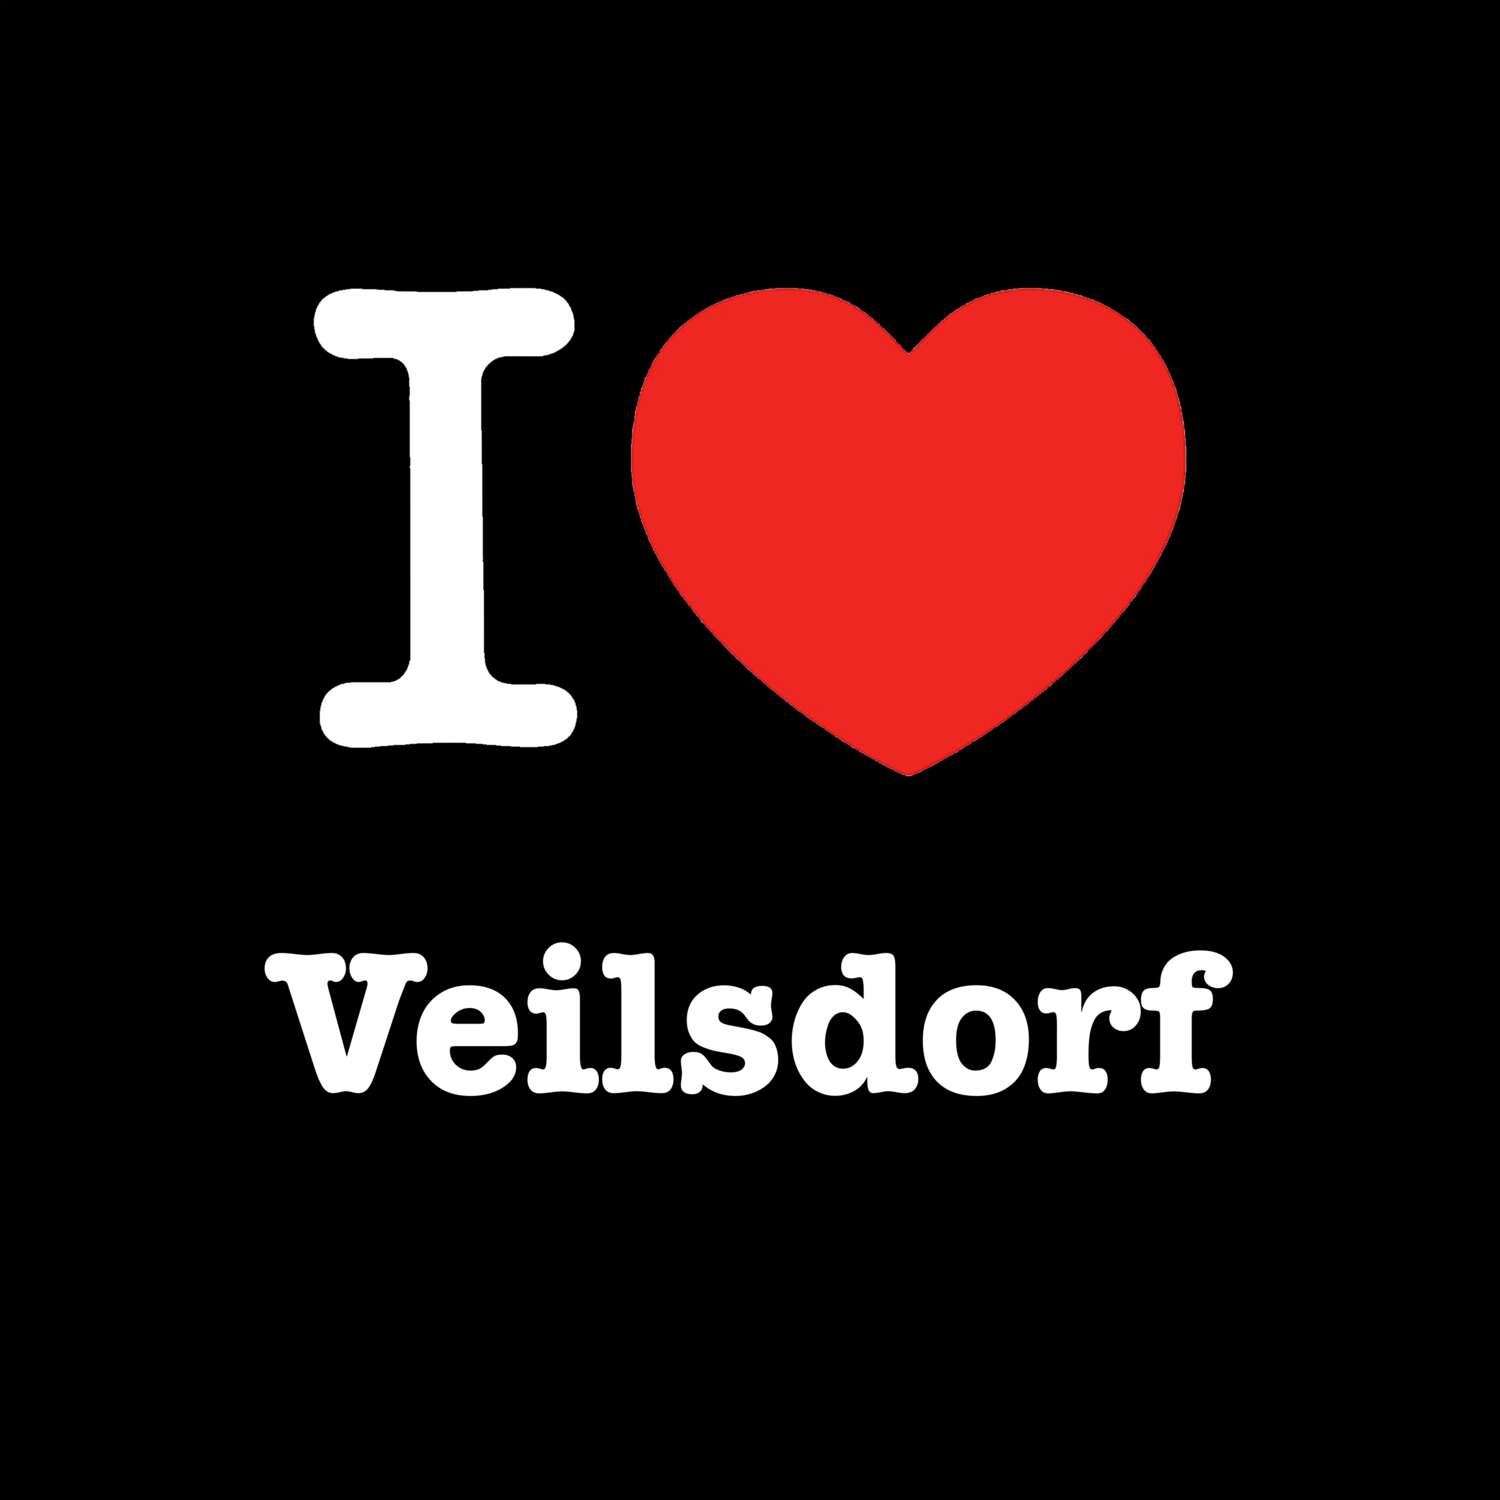 Veilsdorf T-Shirt »I love«